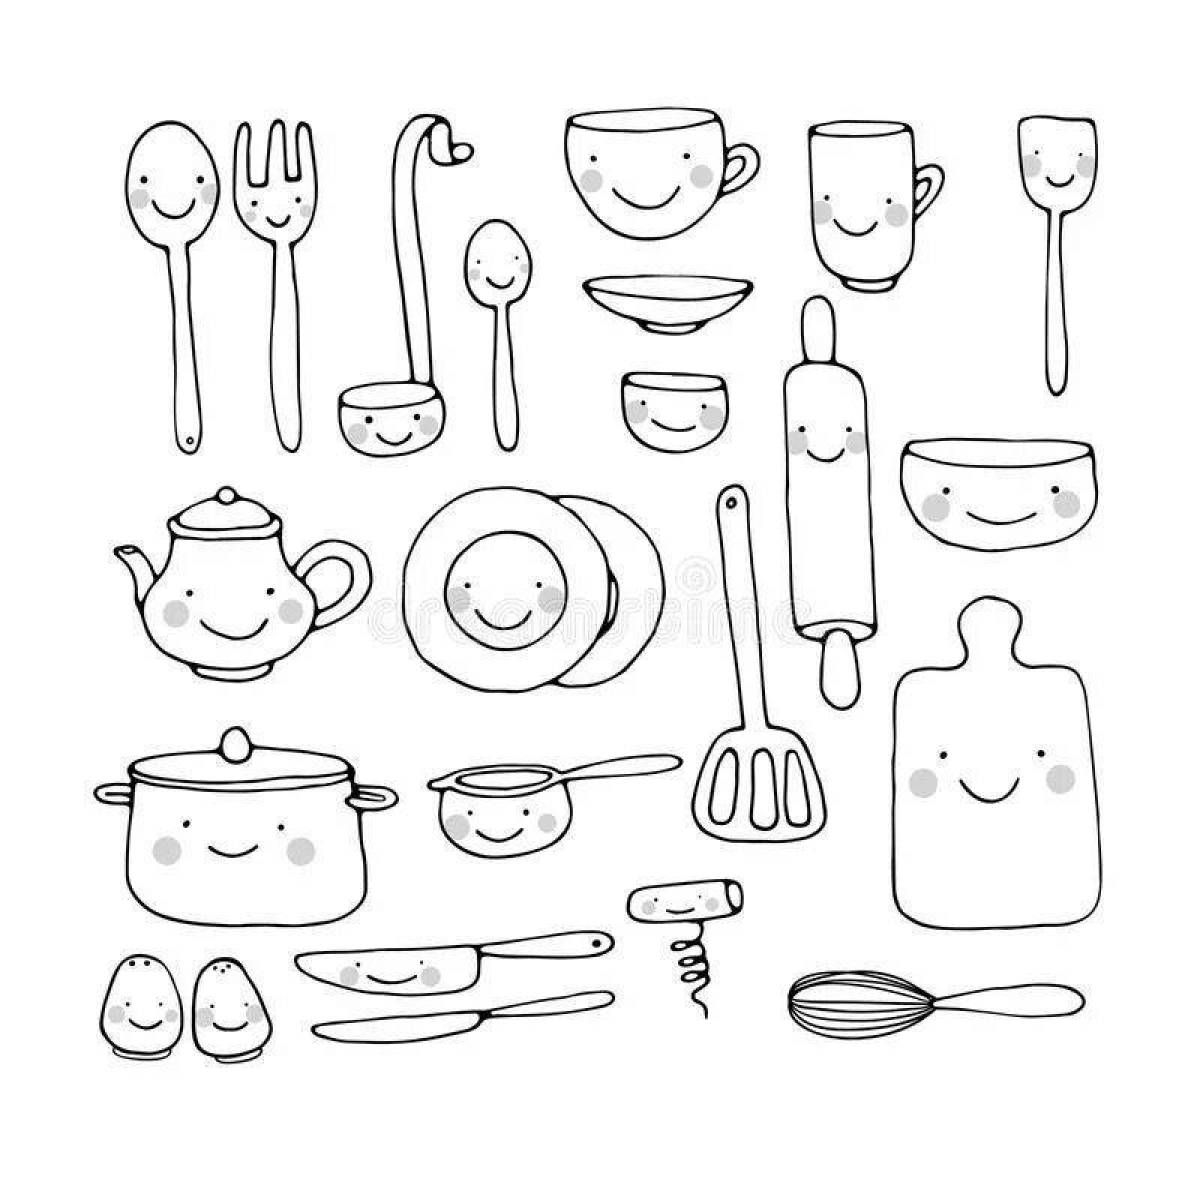 Adorable kitchen appliances coloring page